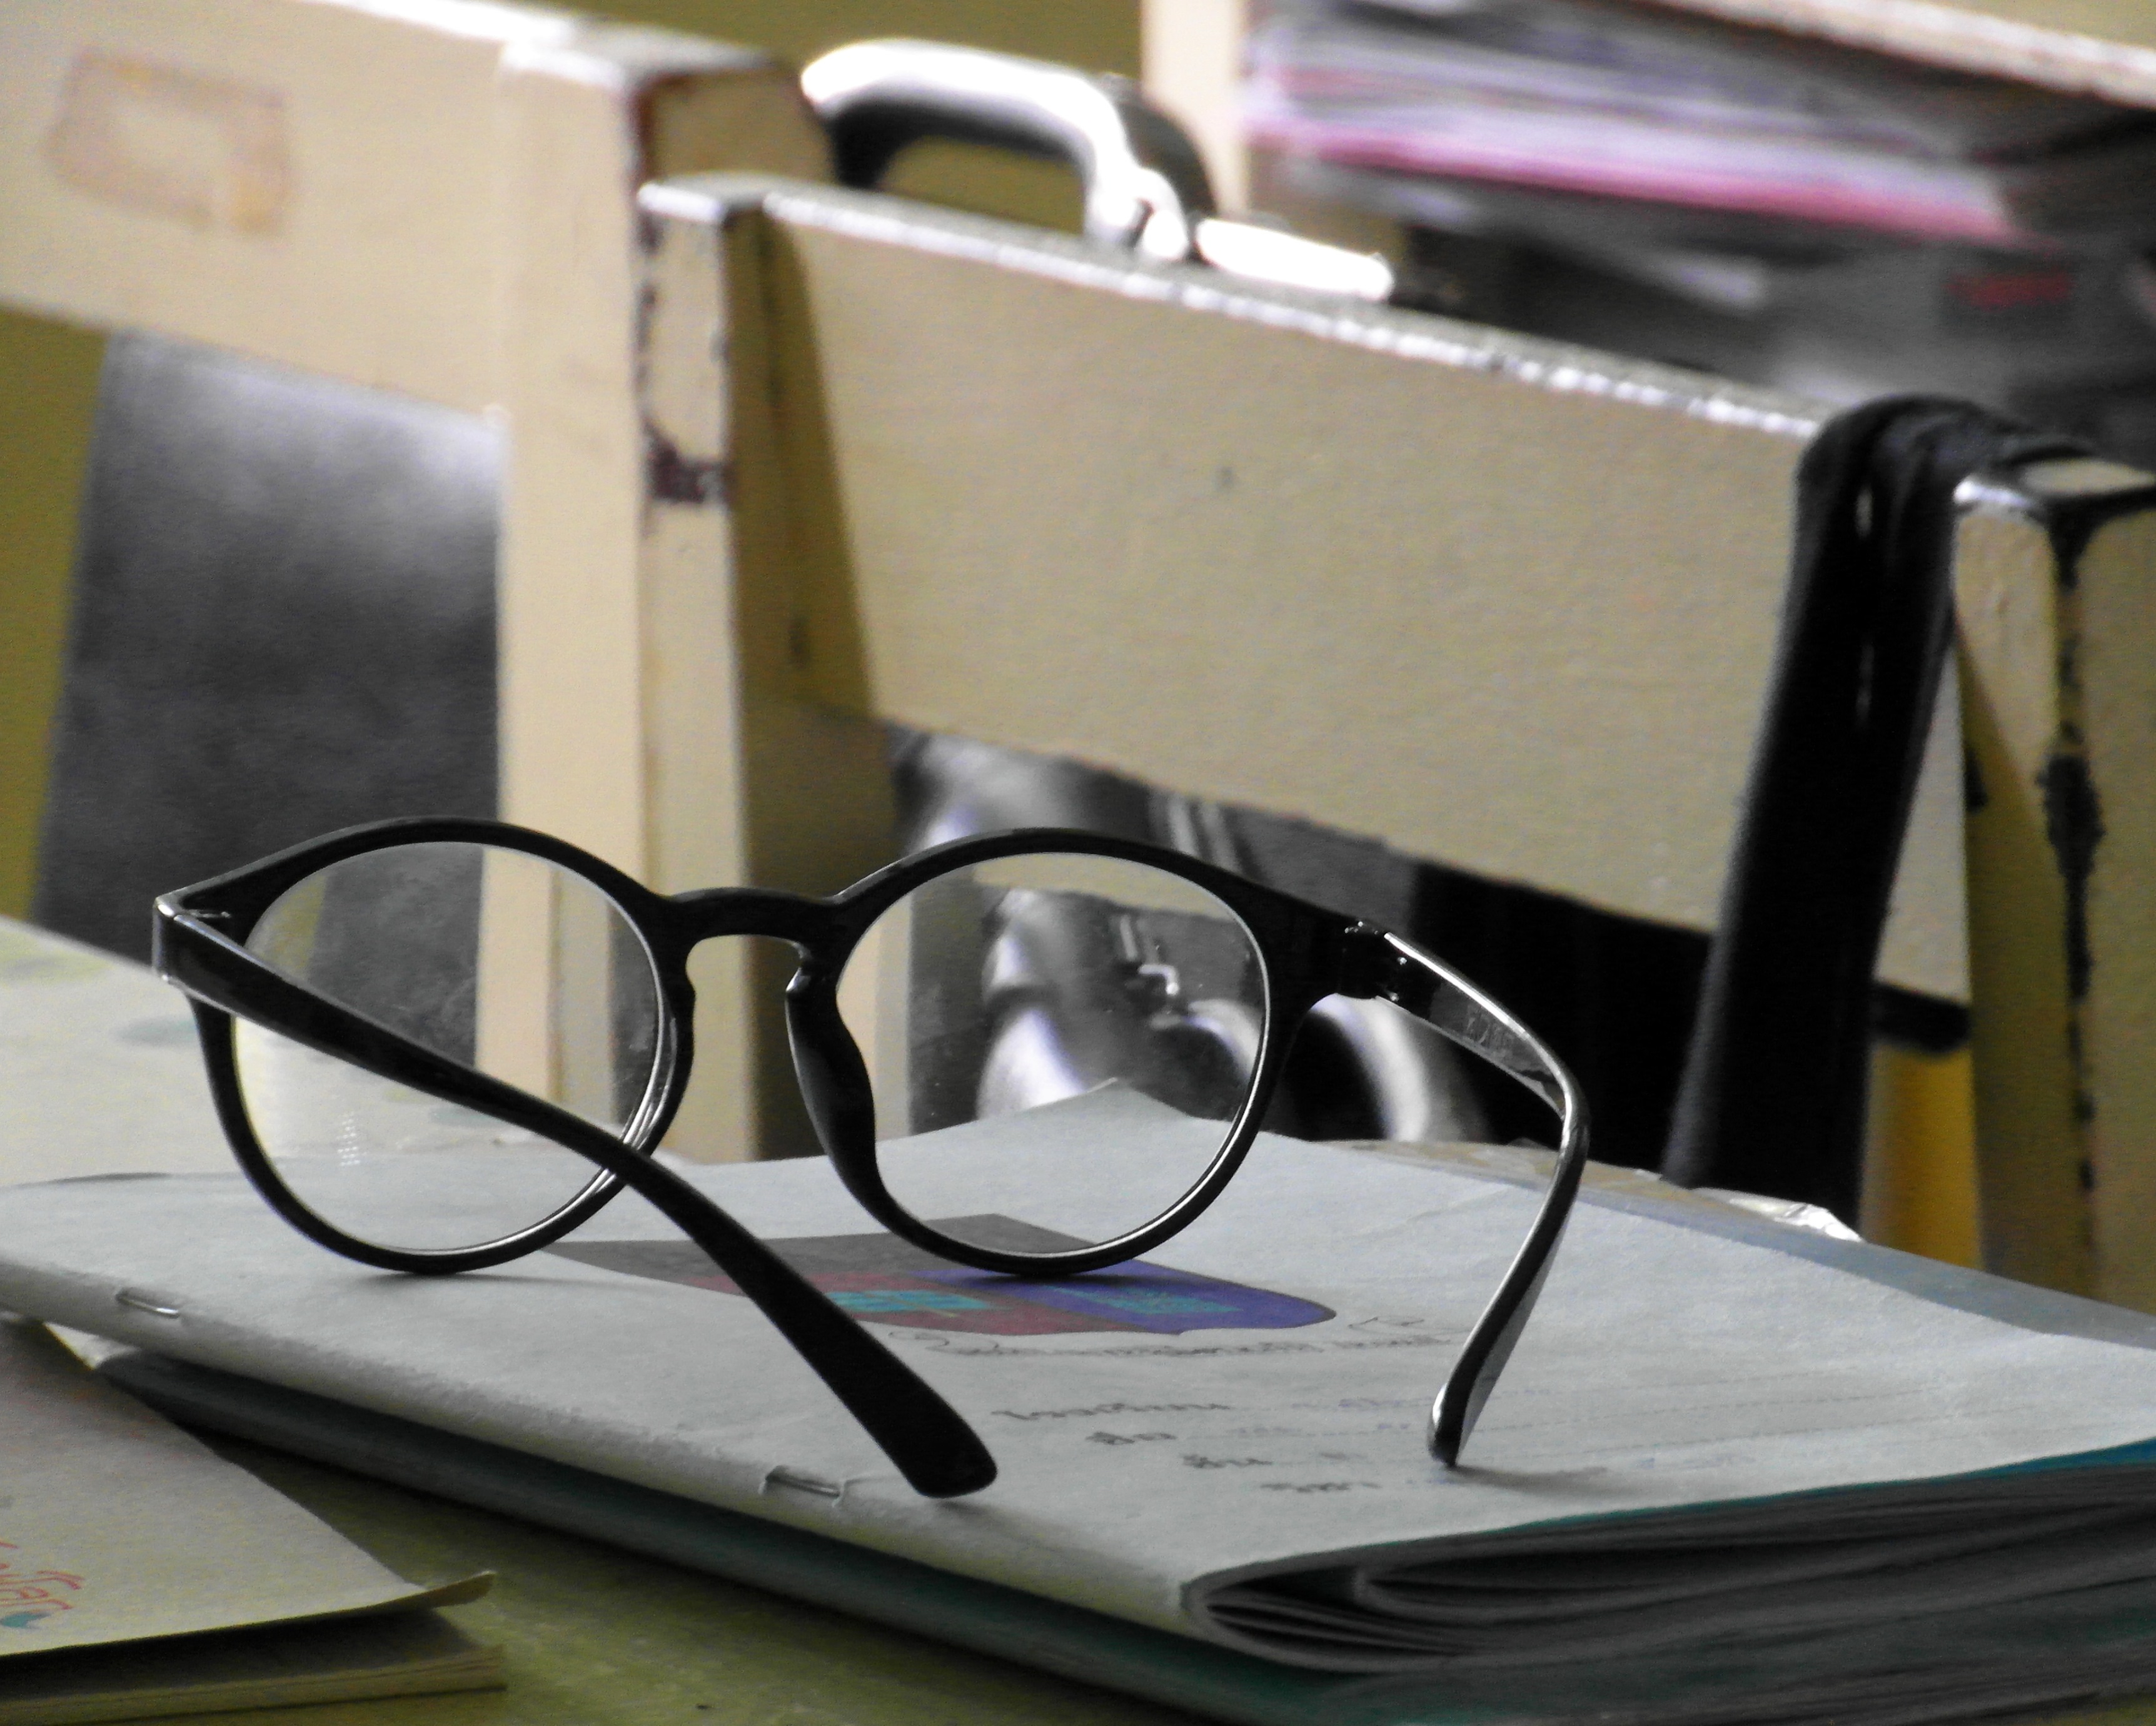 Glasses on a school desk photo